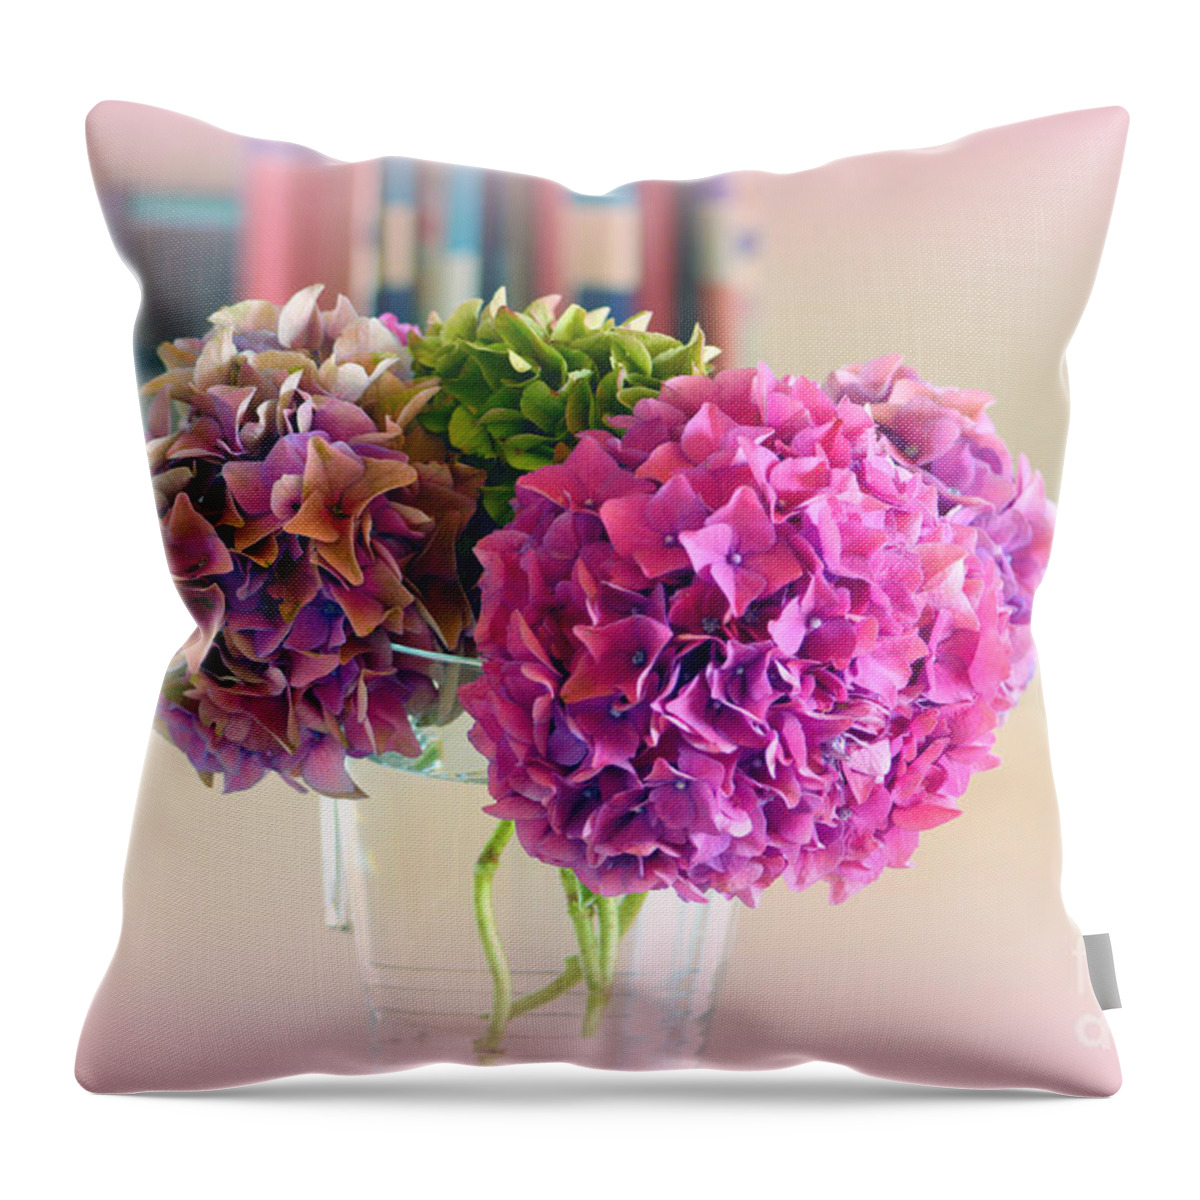 Hortensias Throw Pillow featuring the photograph Pink Joy Hydrangeas by Susanne Van Hulst